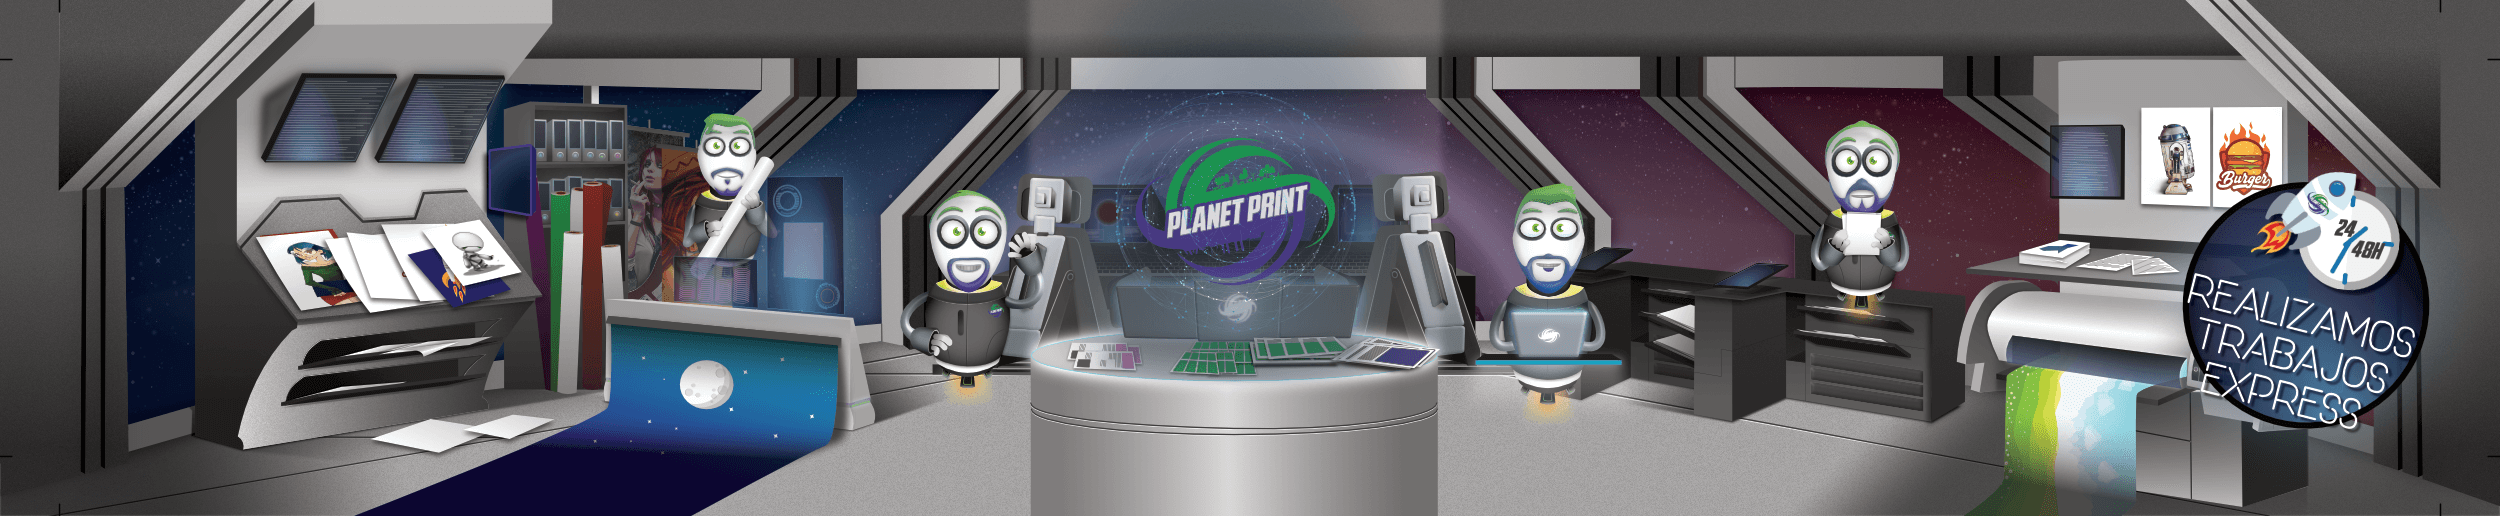 diseño nave planet print imprenta